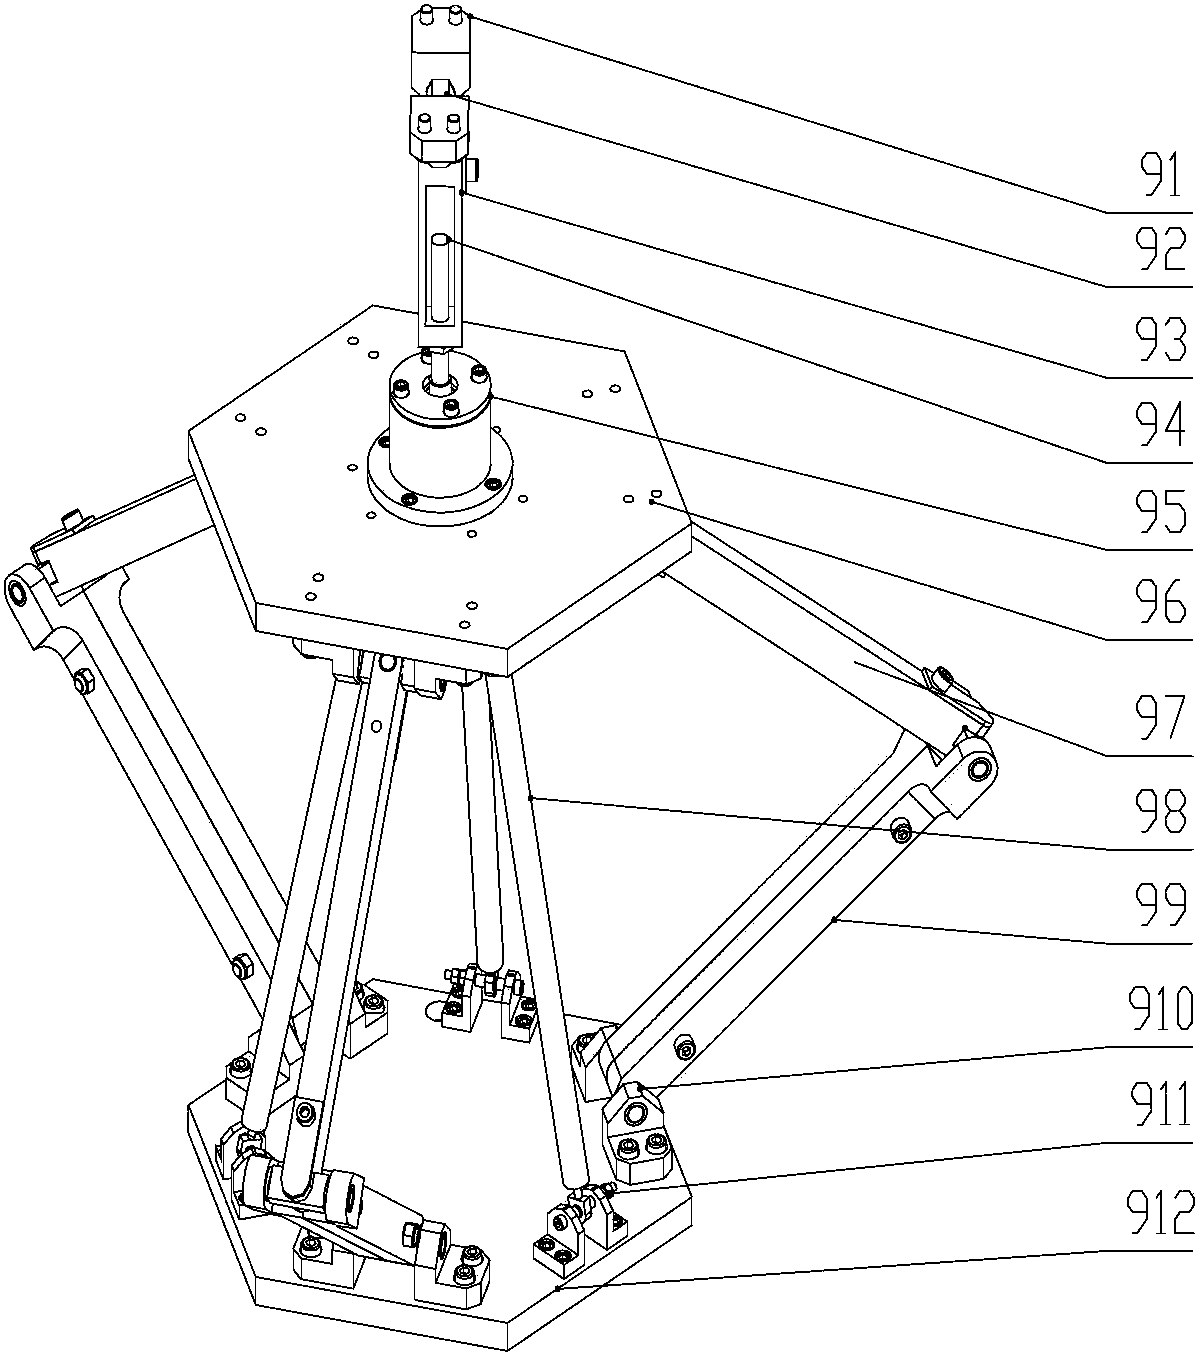 Six-dimensional parallel-connection test bench for automobile suspension test